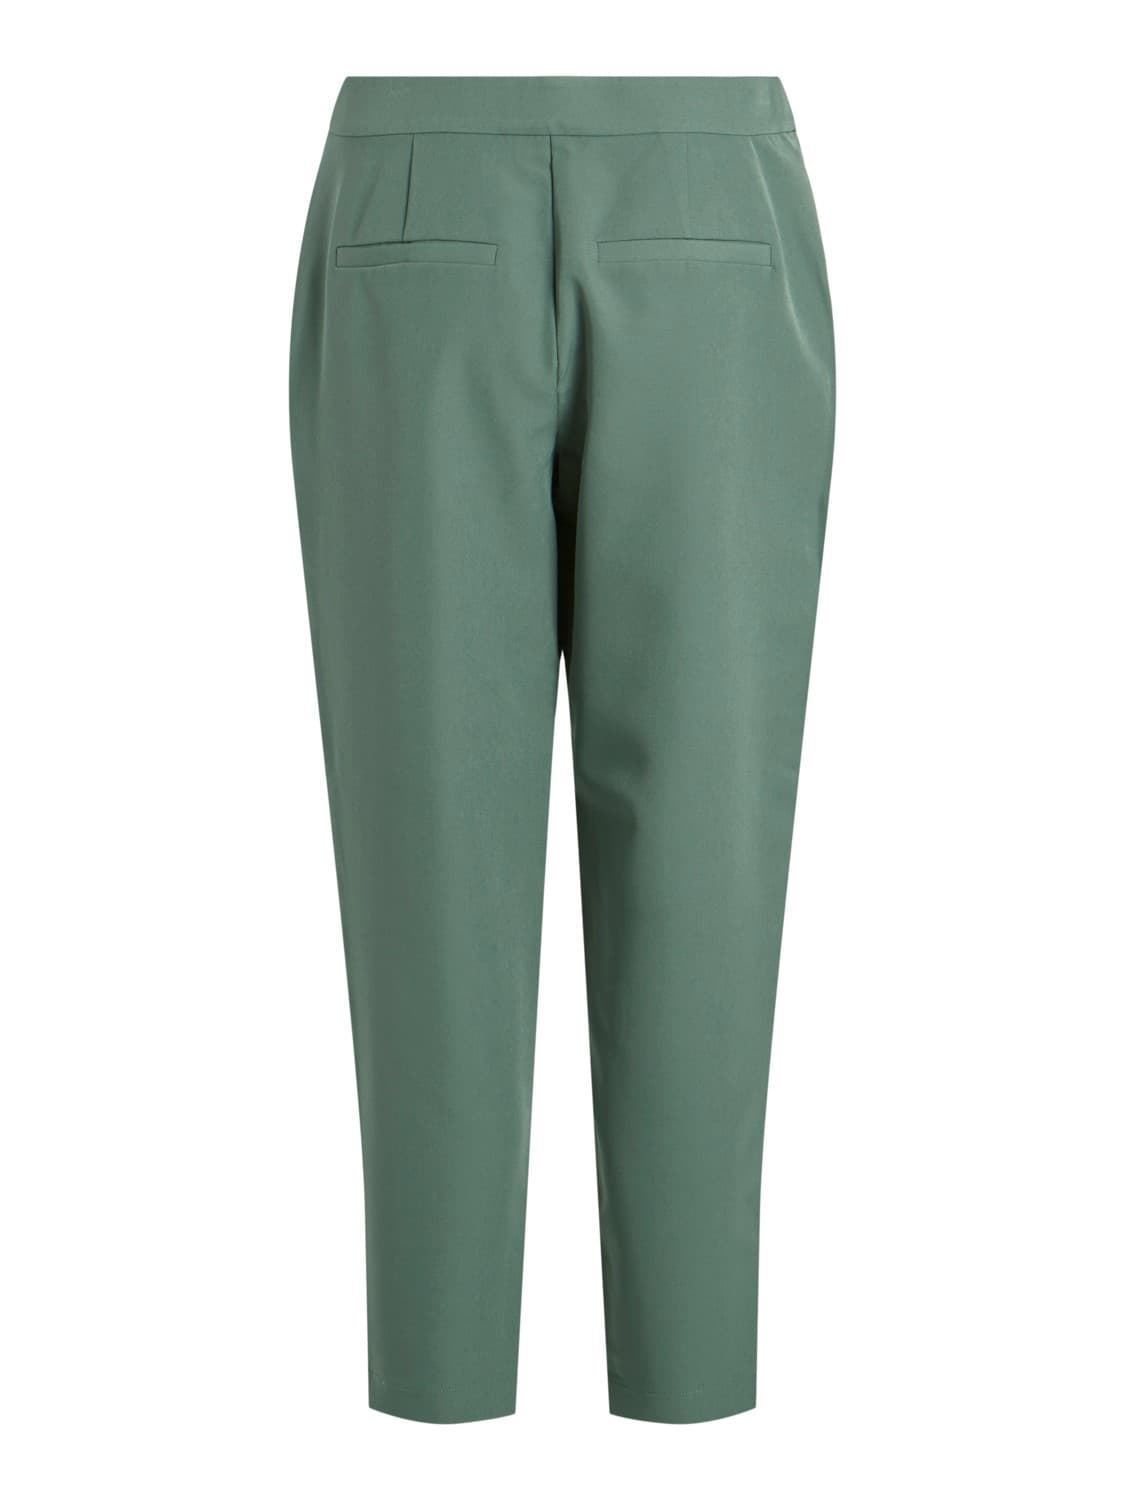 Pantalón verde Vicarrie - Imagen 4